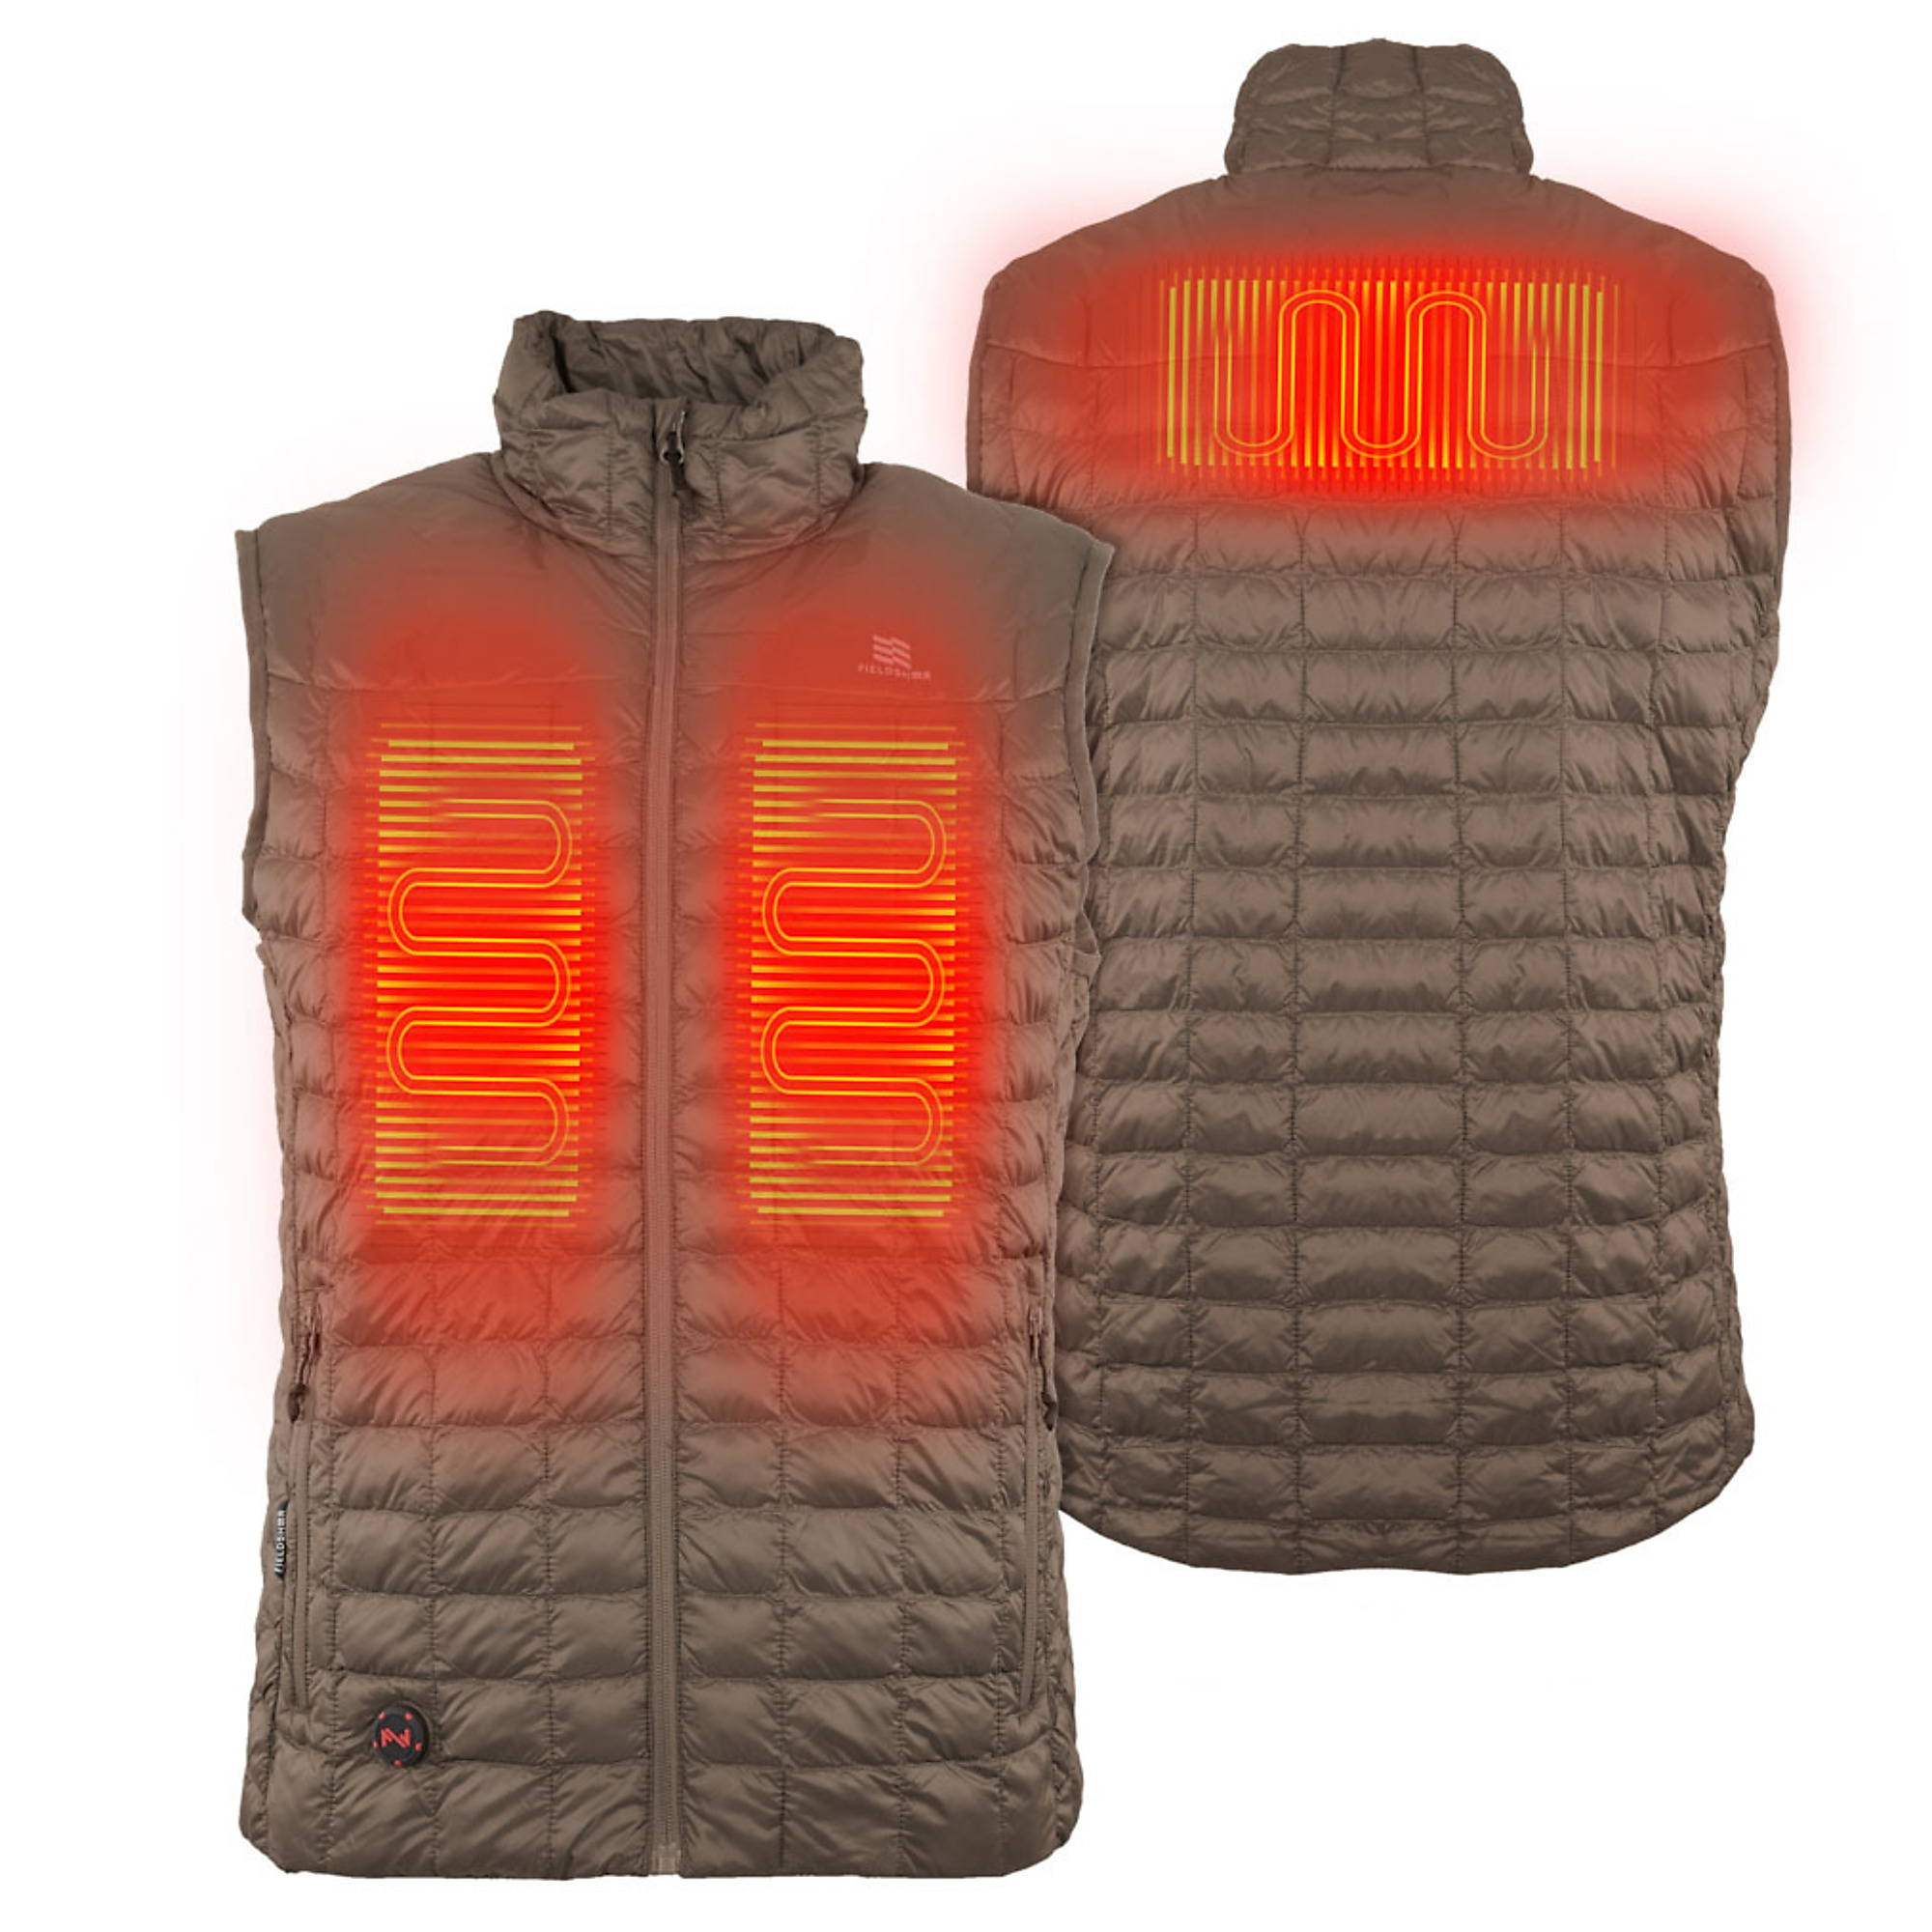 Fieldsheer, Men's Backcountry Heated Vest with 7.4v Battery, Size S, Color Tan, Model MWMV04340221